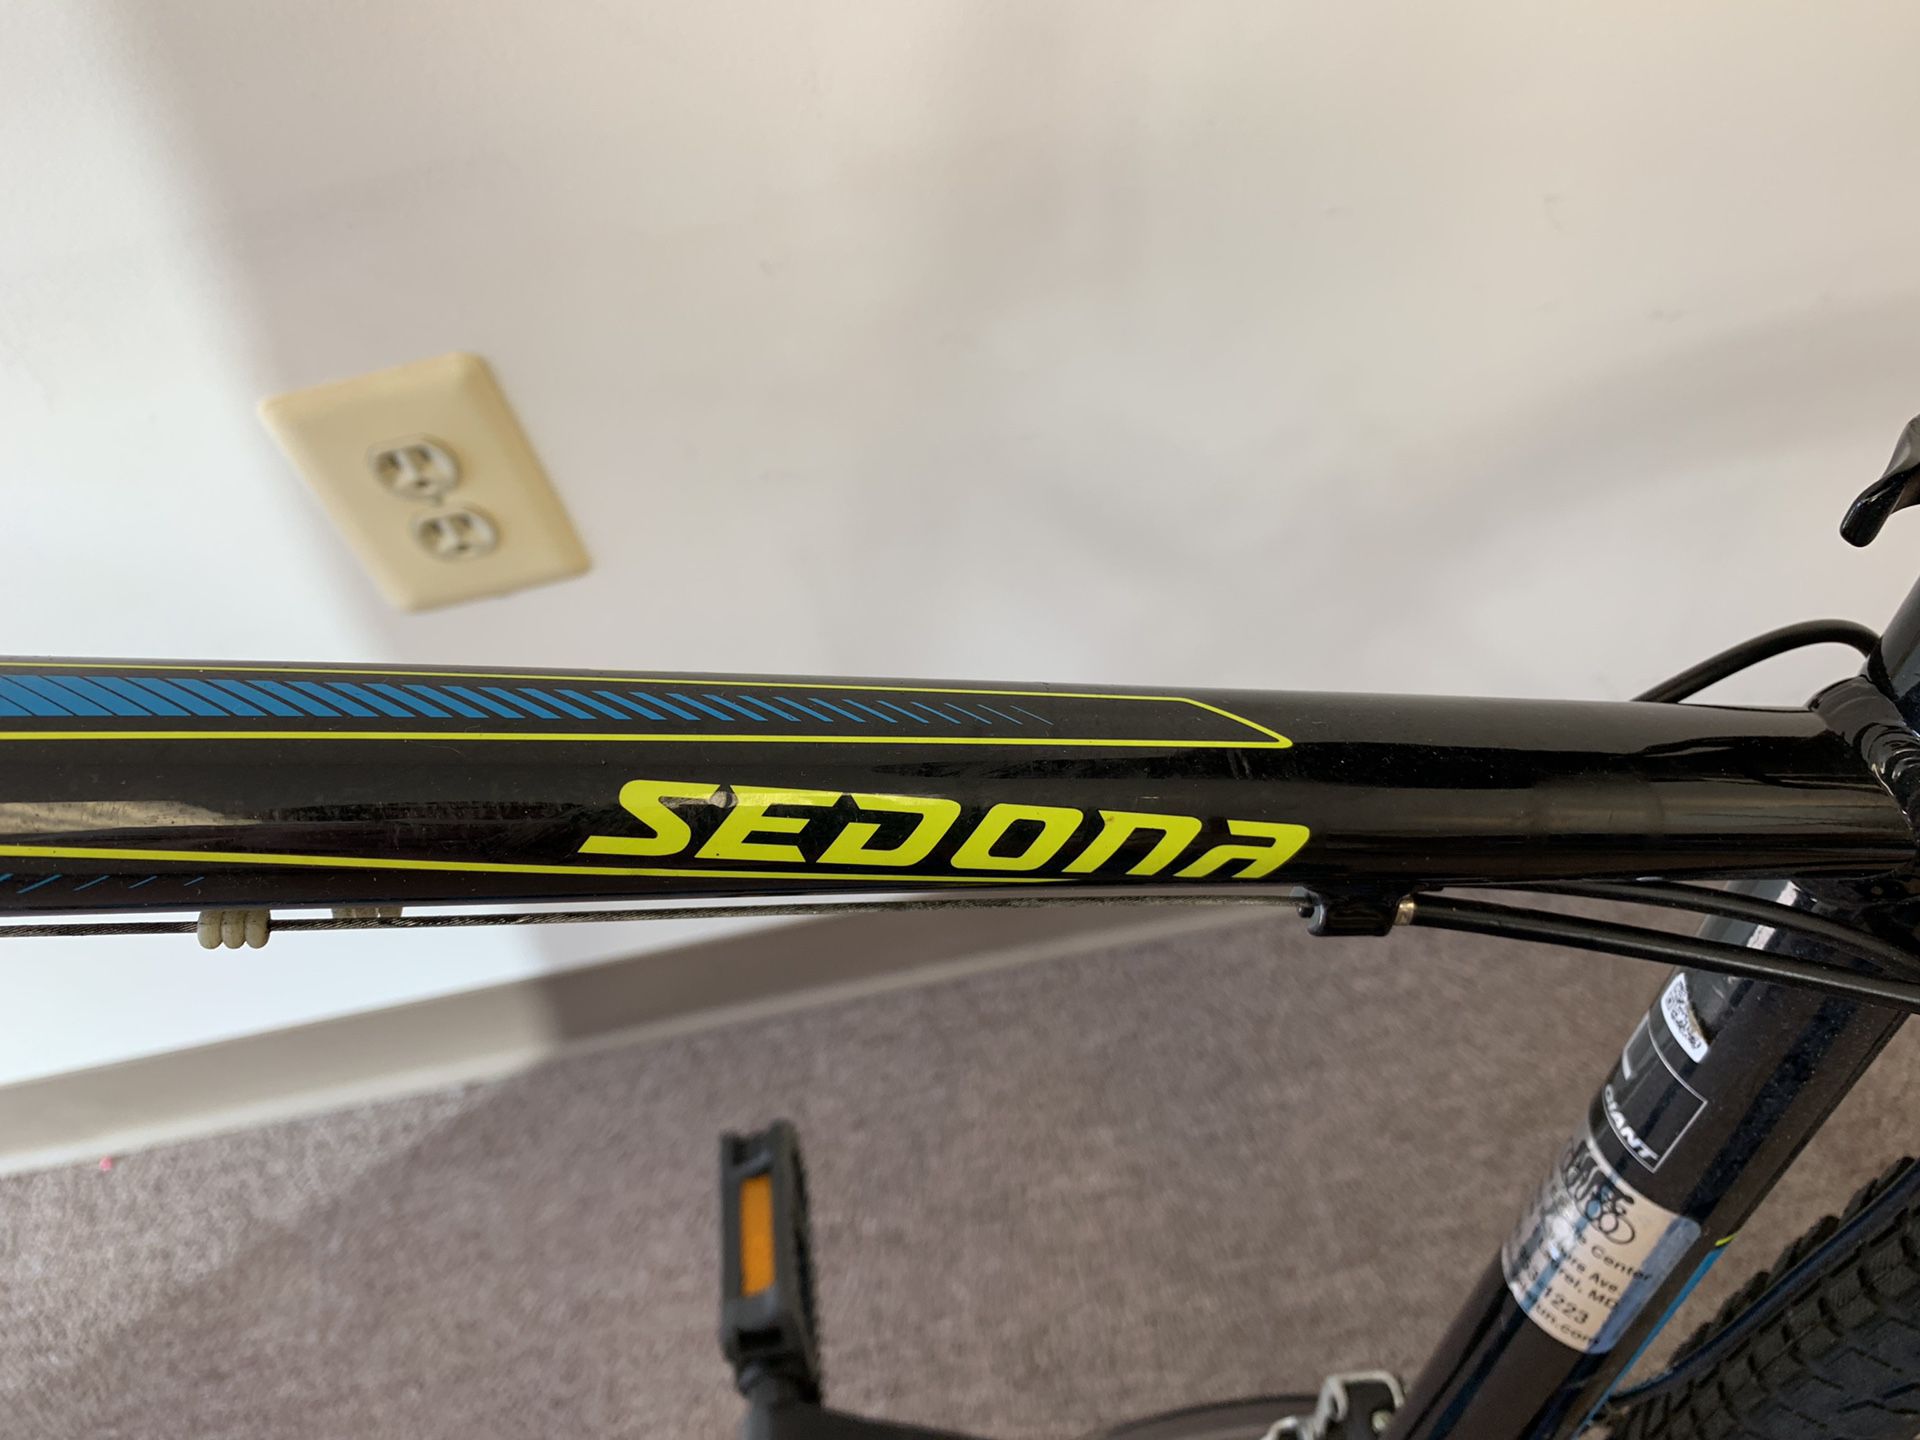 Sedona giant men’s bike